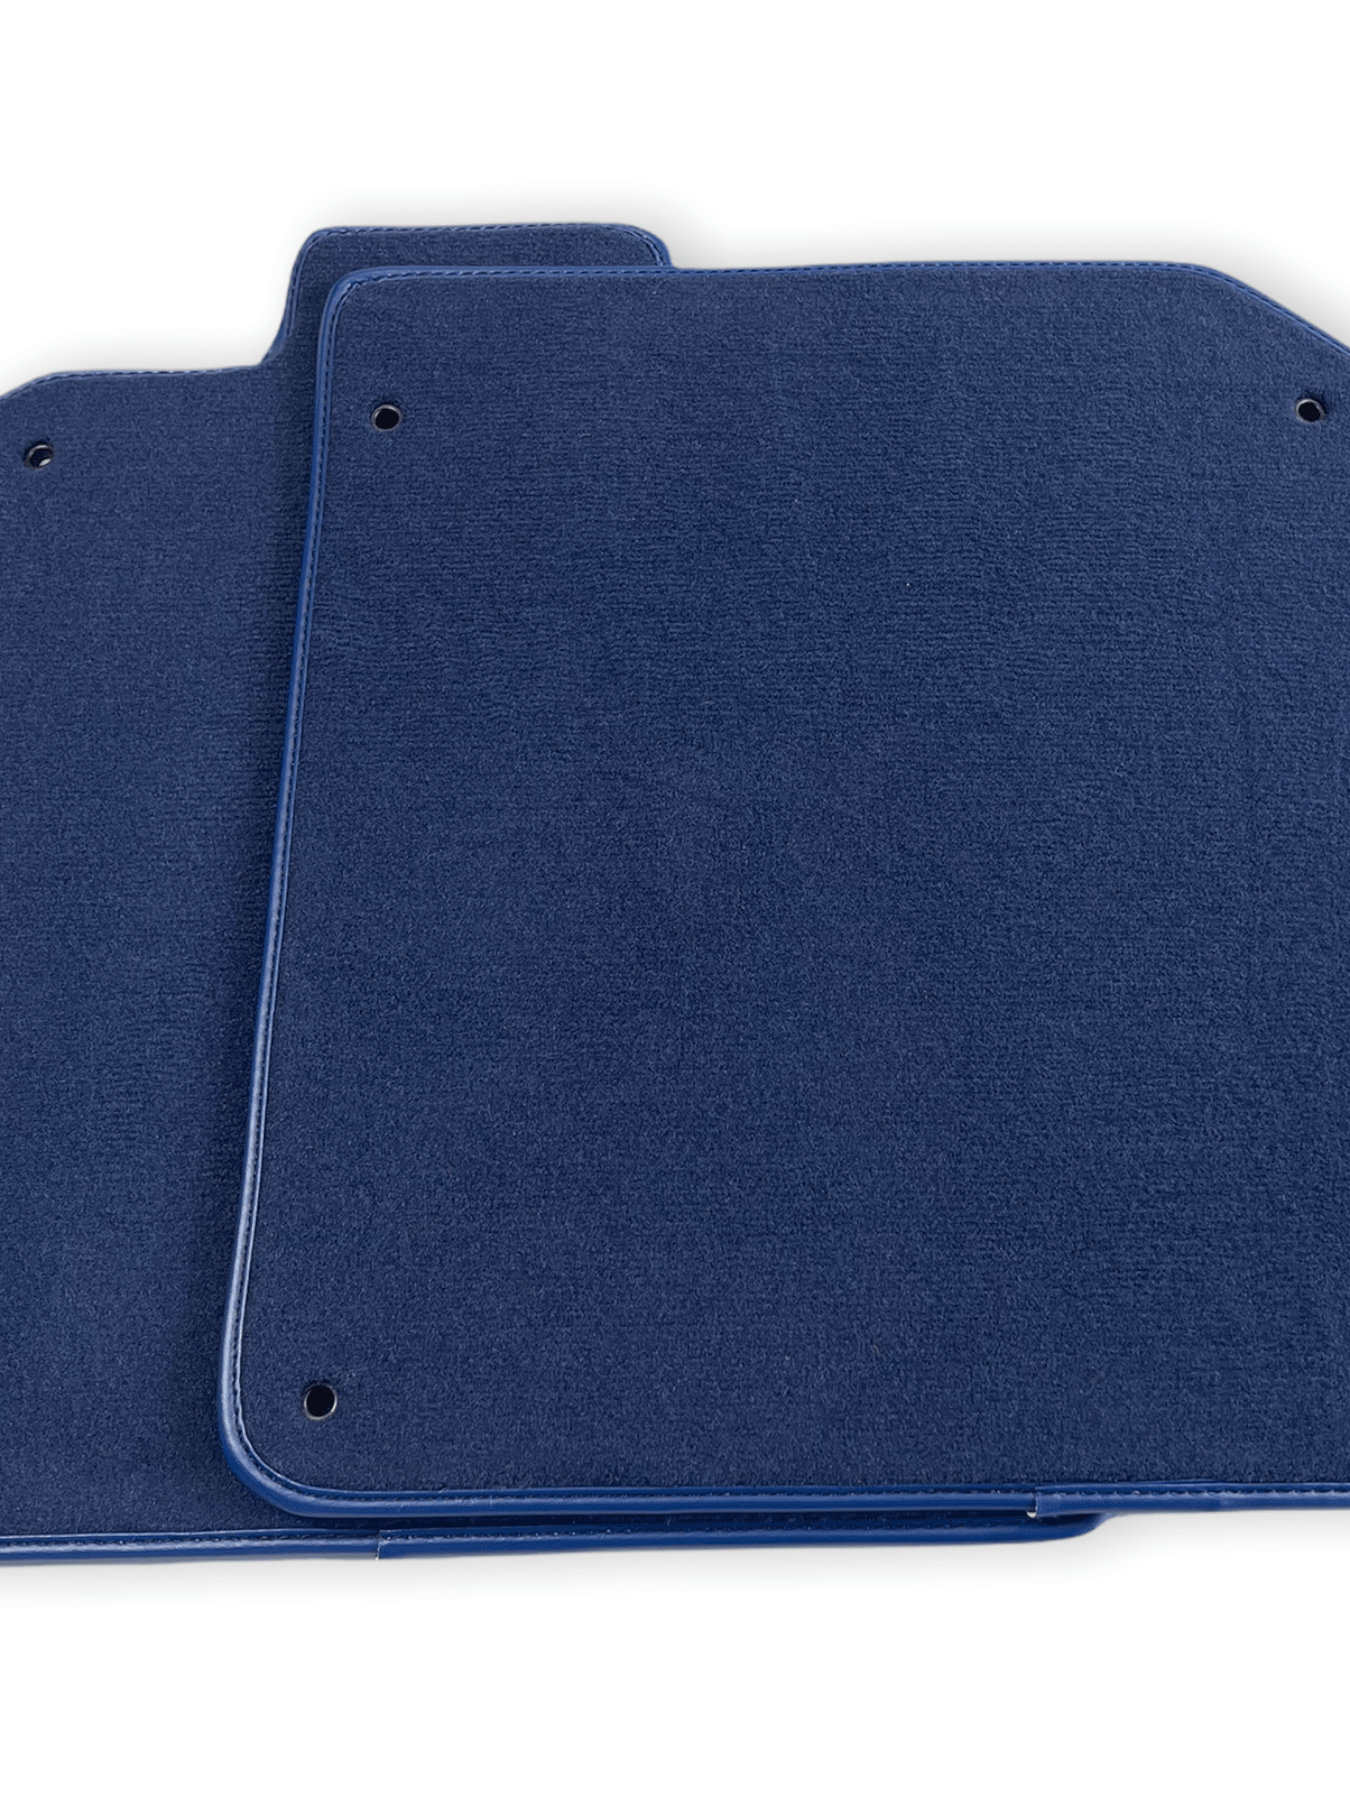 Floor Mats for Lamborghini Aventador Dark Blue Color - AutoWin